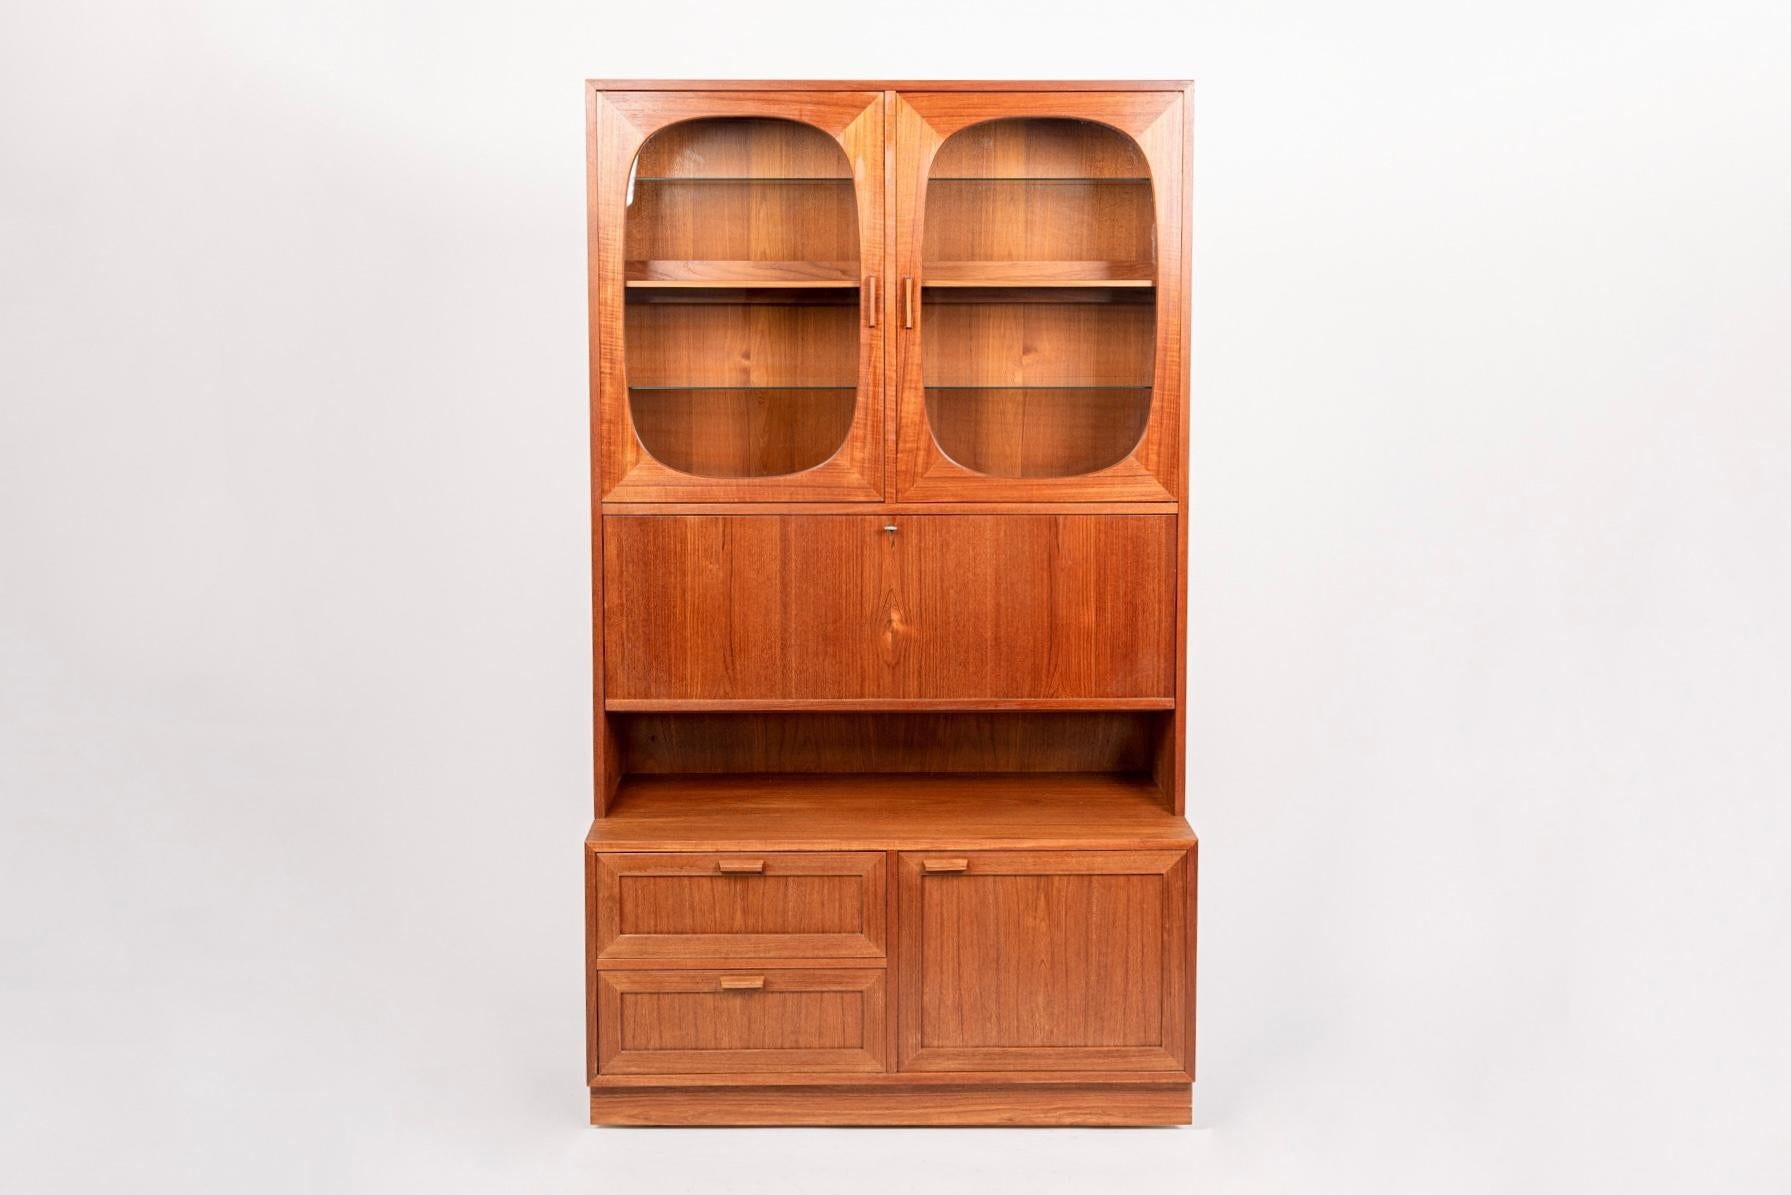 20th Century Mid Century Danish Teak Wood Display Cabinets with Glass Doors & Drop-down